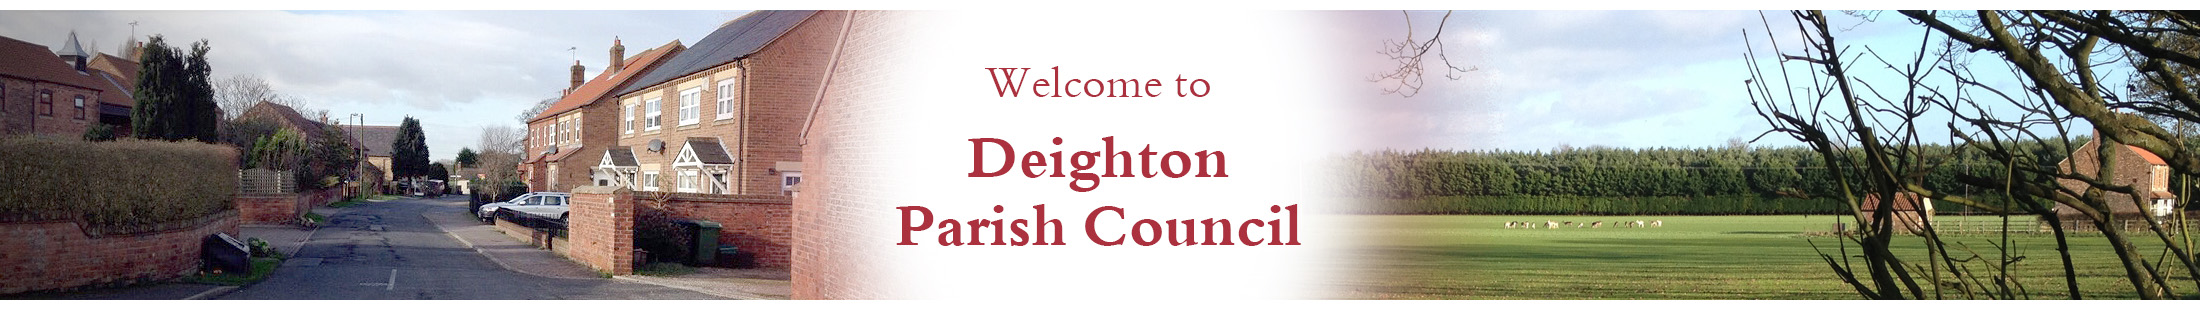 Header Image for Deighton Parish Council 